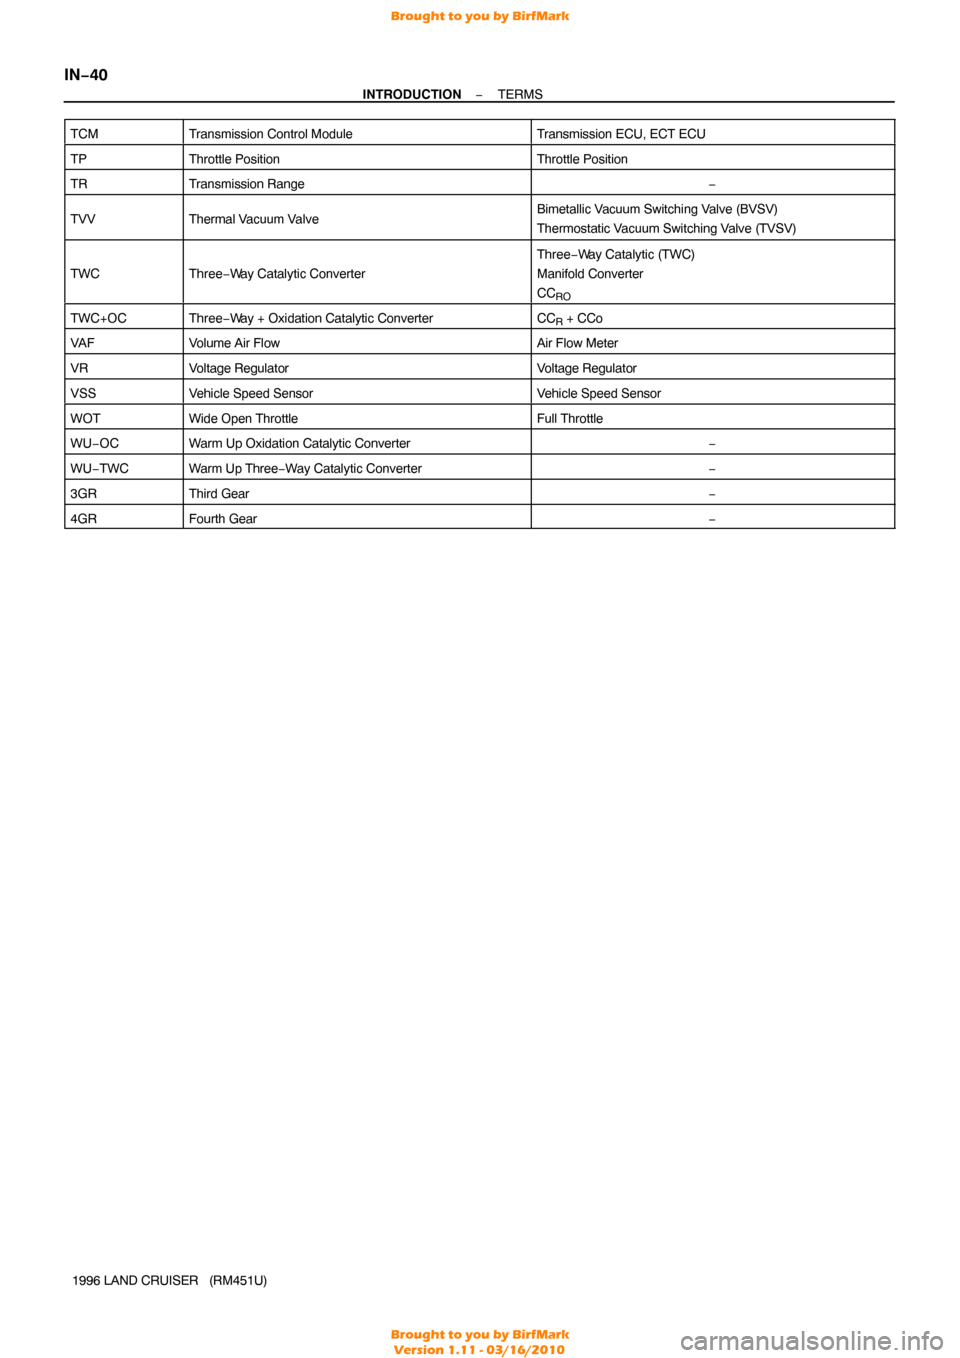 TOYOTA LAND CRUISER 1996 J80 Service Manual IN−40
−
INTRODUCTION TERMS
1996 LAND CRUISER   (RM451U)
TCM
Transmission Control ModuleTransmission ECU, ECT ECU
TPThrottle PositionThrottle Position
TRTransmission Range−
TVVThermal Vacuum V
al